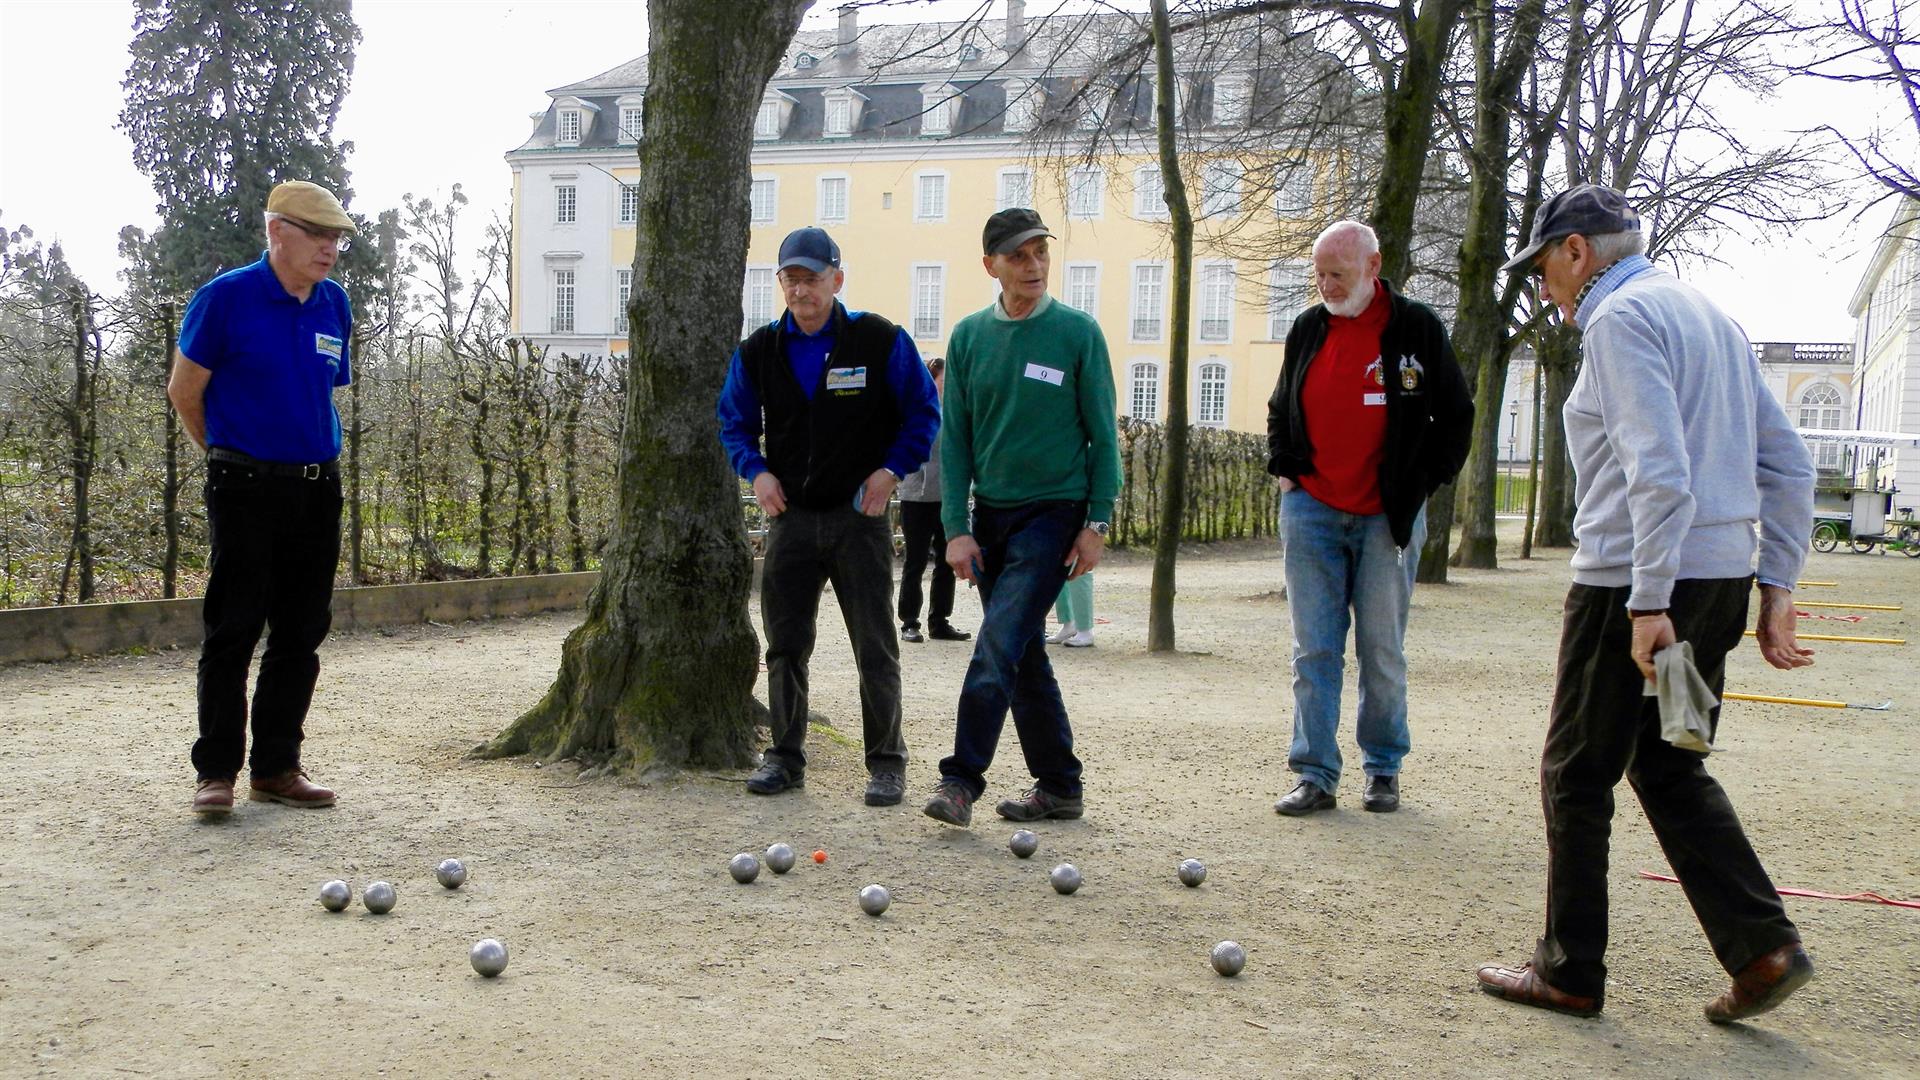 Boule Spieler vor Schloss Augustusburg